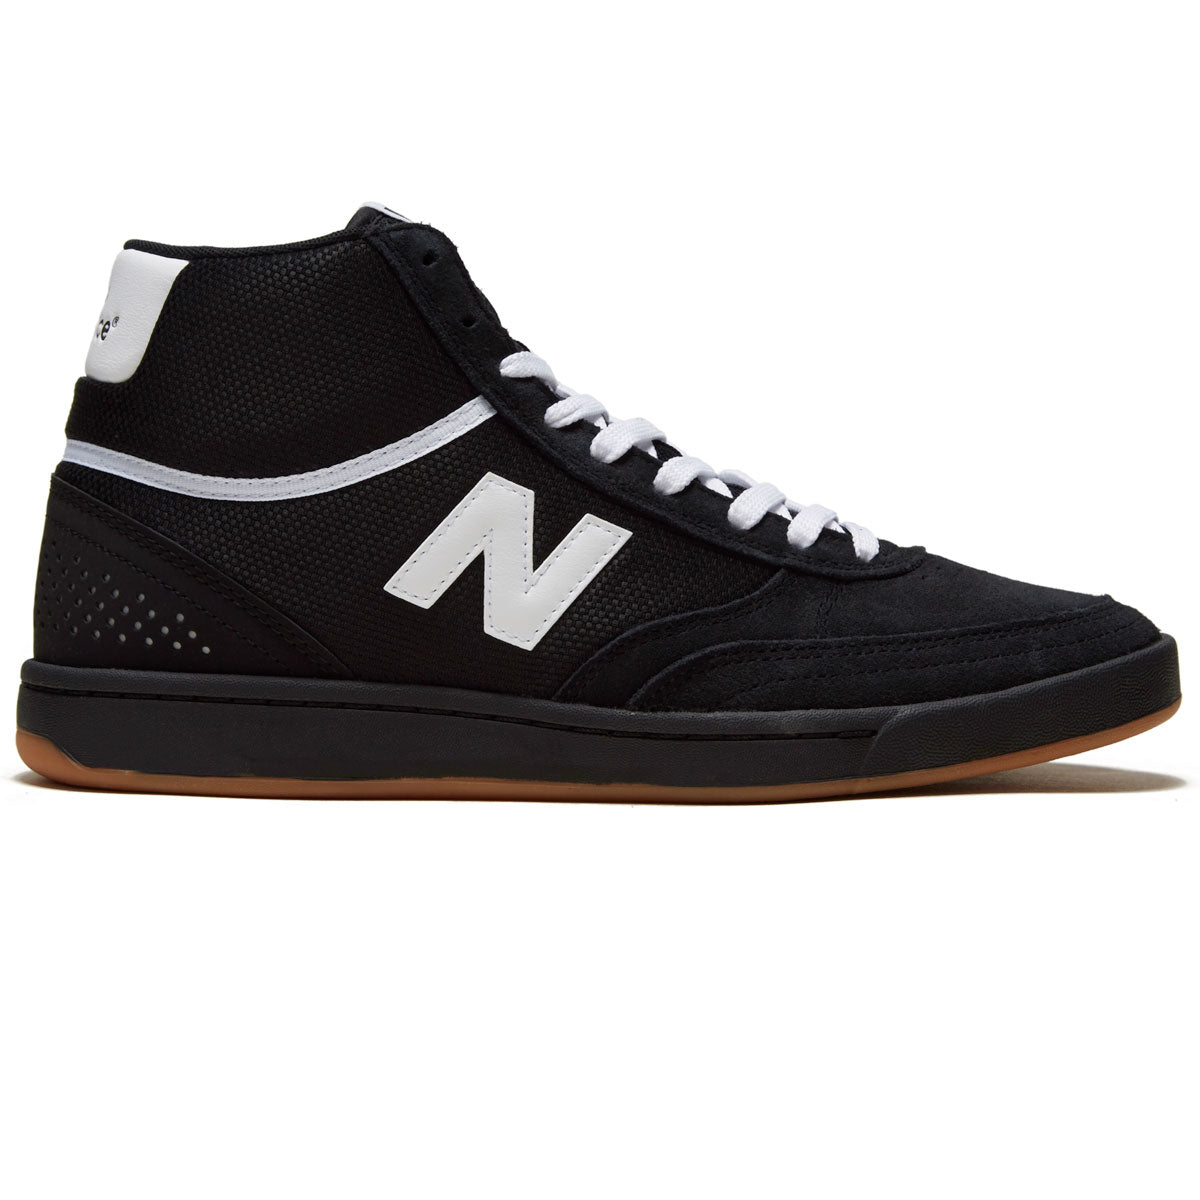 New Balance 440 Hi Shoes - Black/White